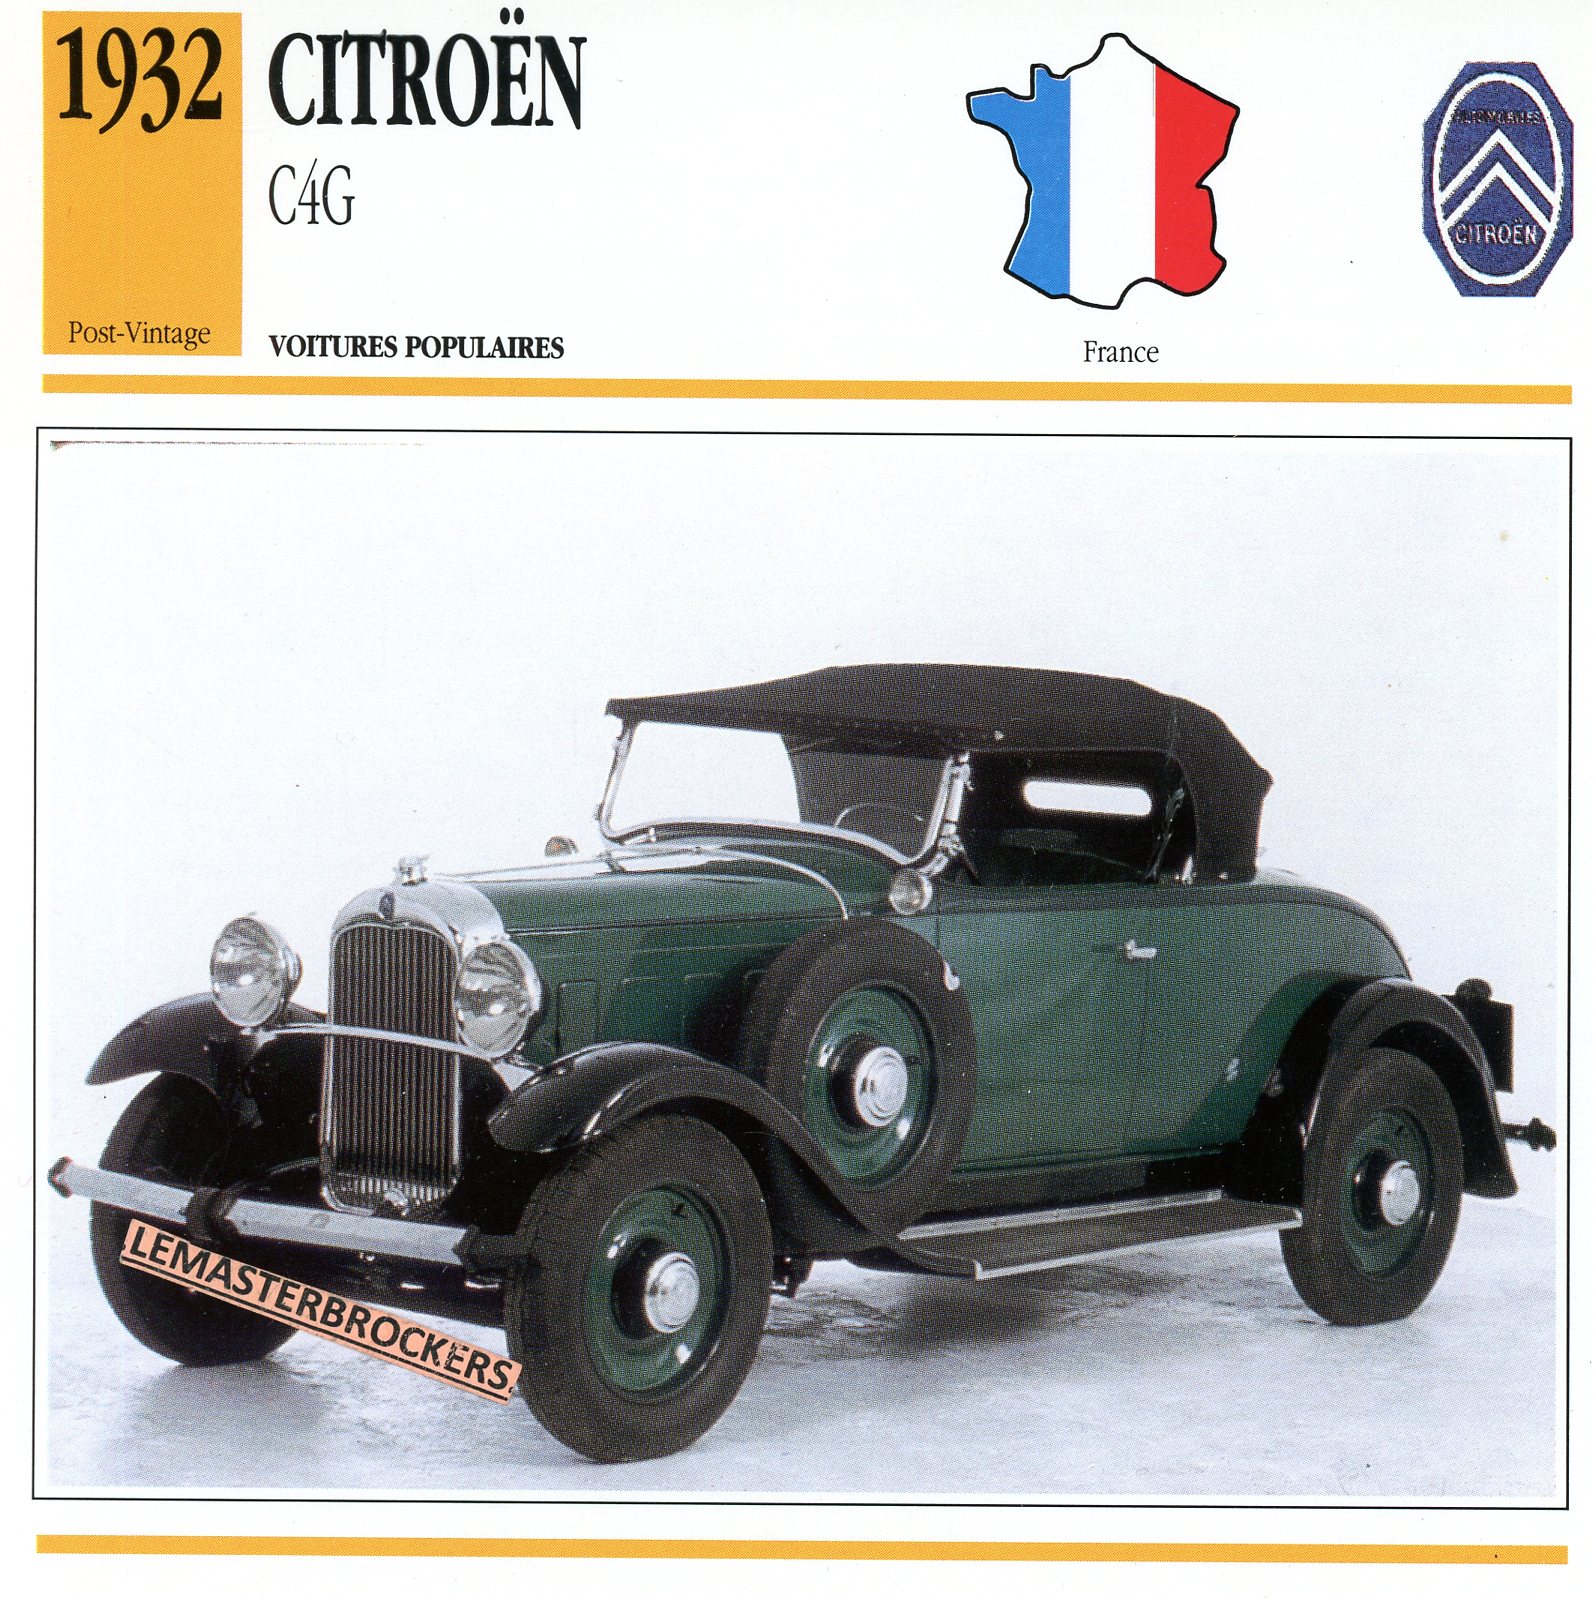 FICHE-CITROËN-C4G-1932-CARD-CARS-LEMASTERBROCKERS